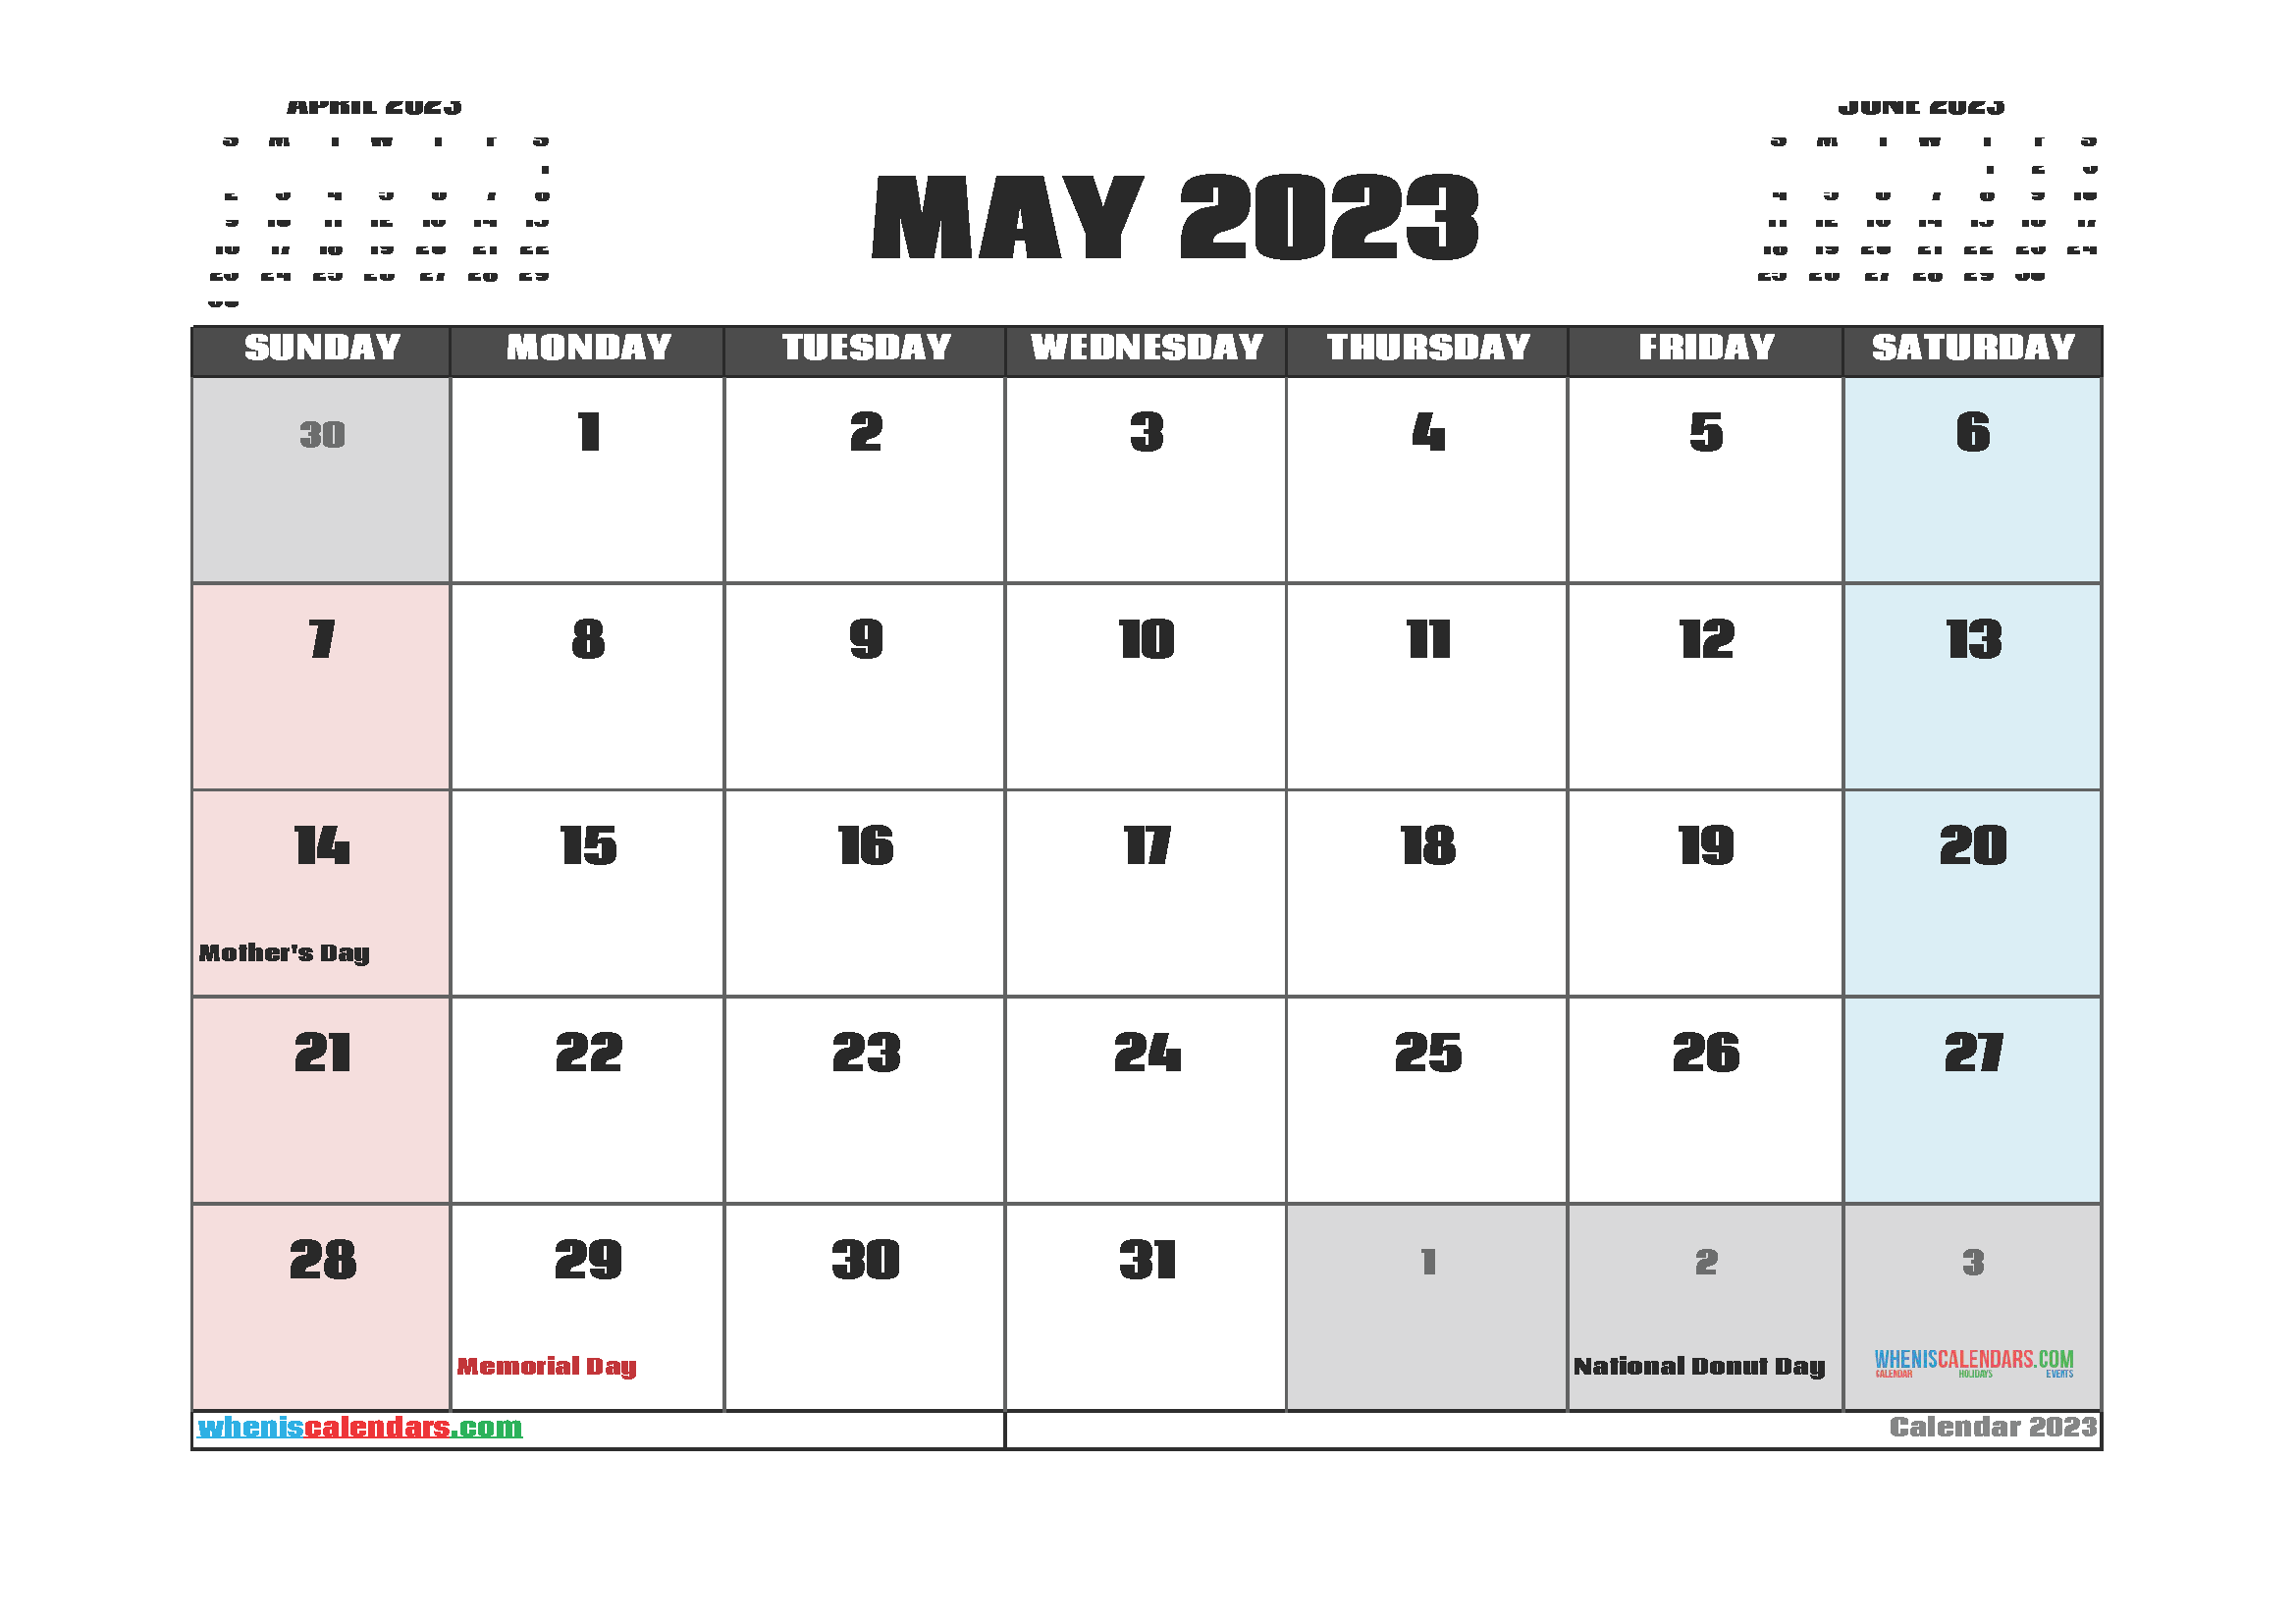 Free Printable Calendar May 2023